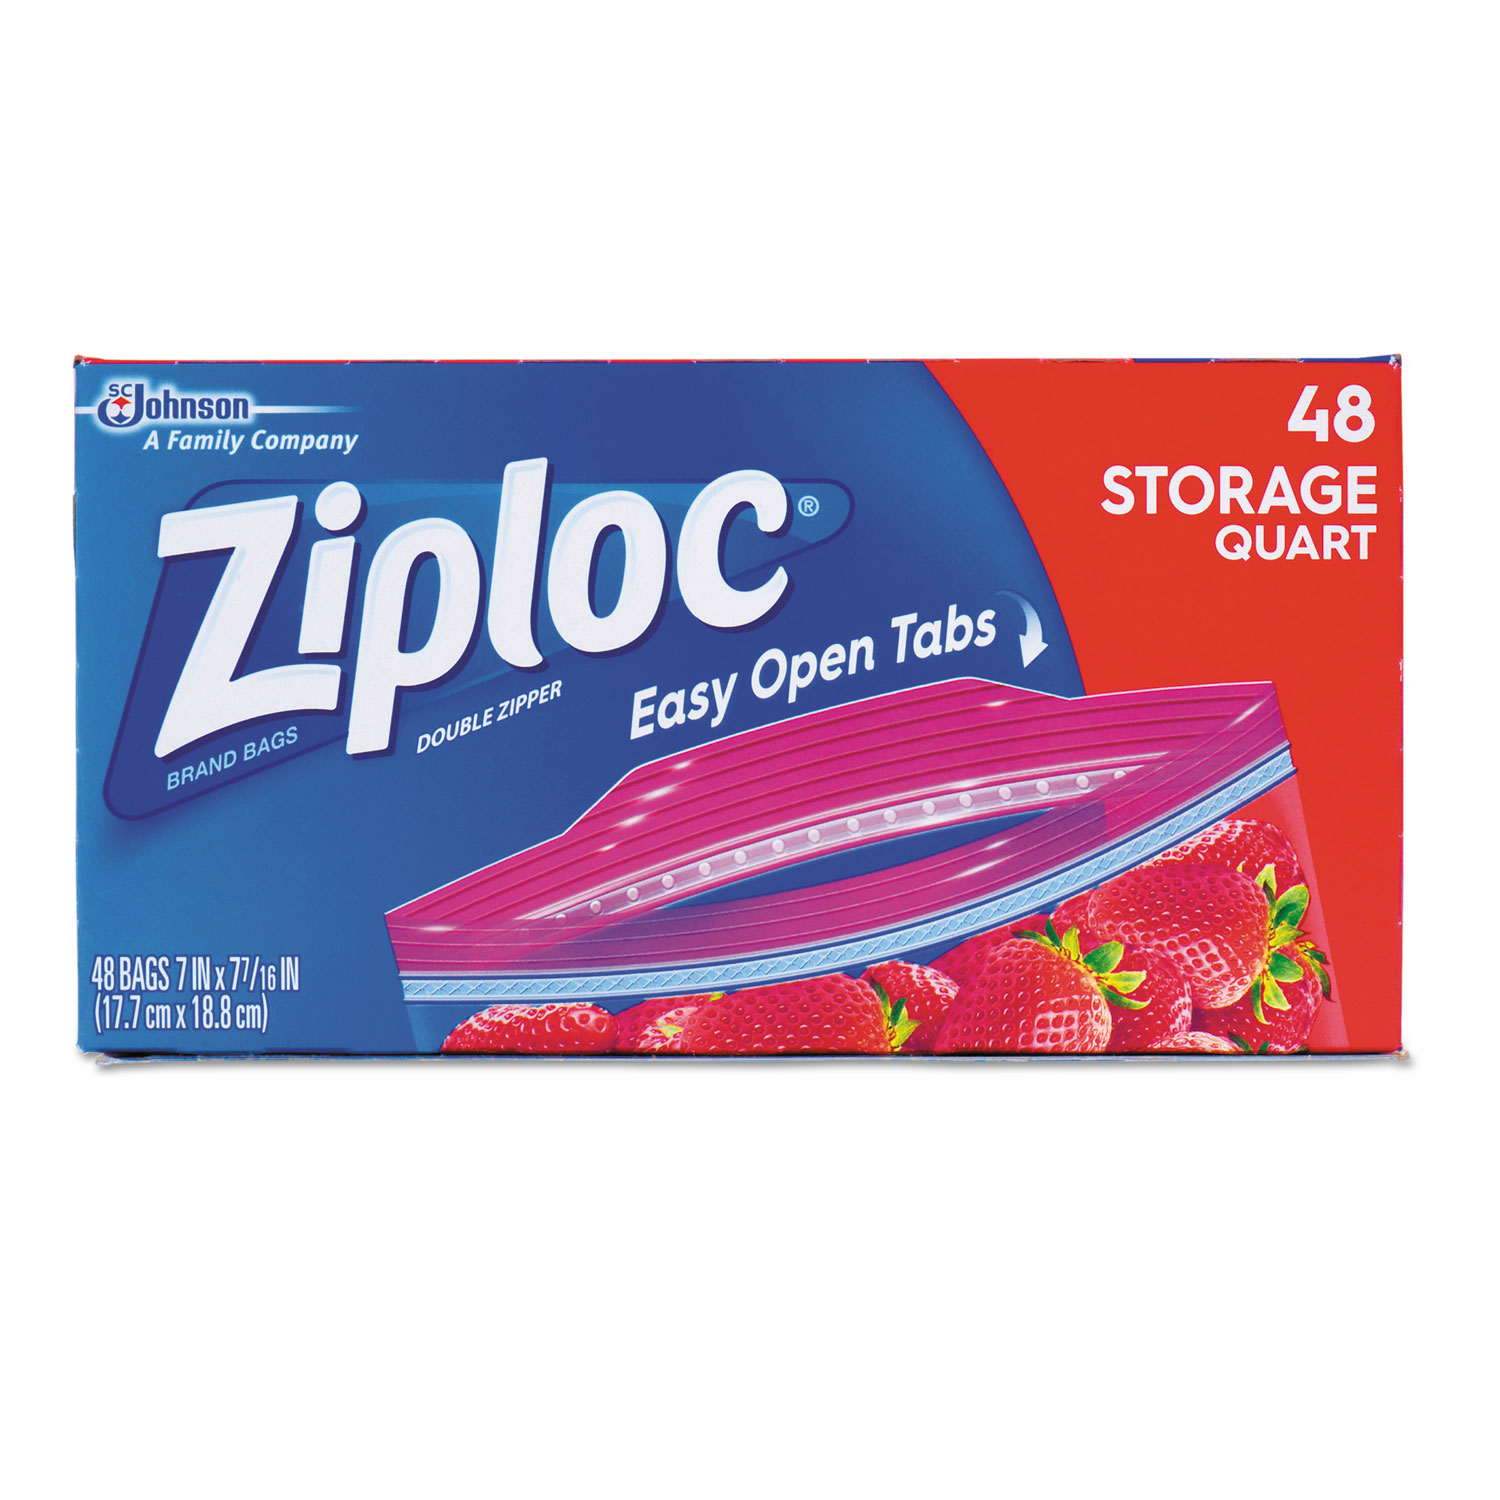 Ziploc® Brand Storage Quart Bags, Plastic Storage Bags for Food, 48 Count - image 1 of 5